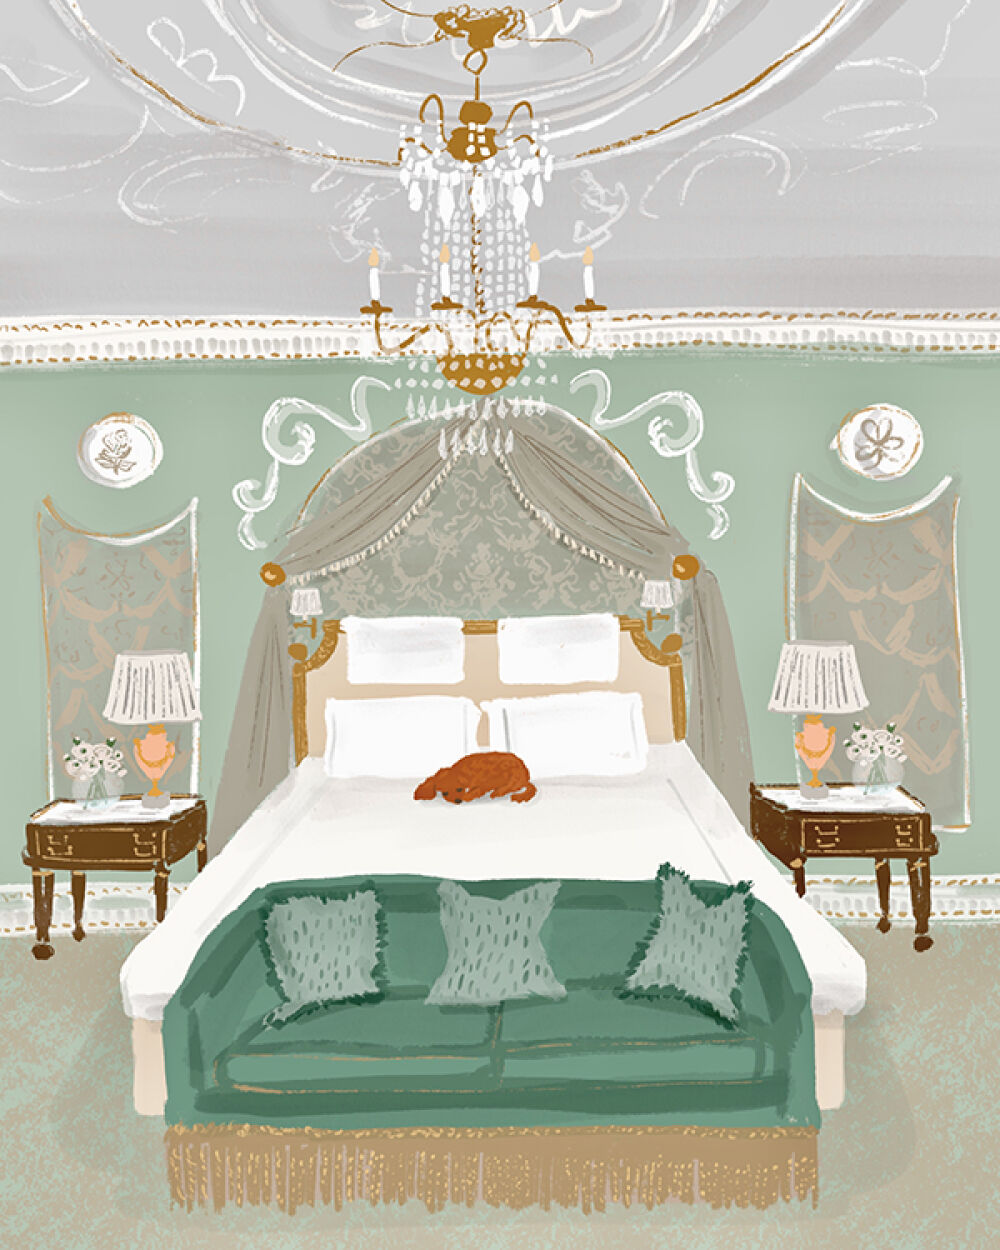 Hotel inspiration illustrated by Christina Gliha